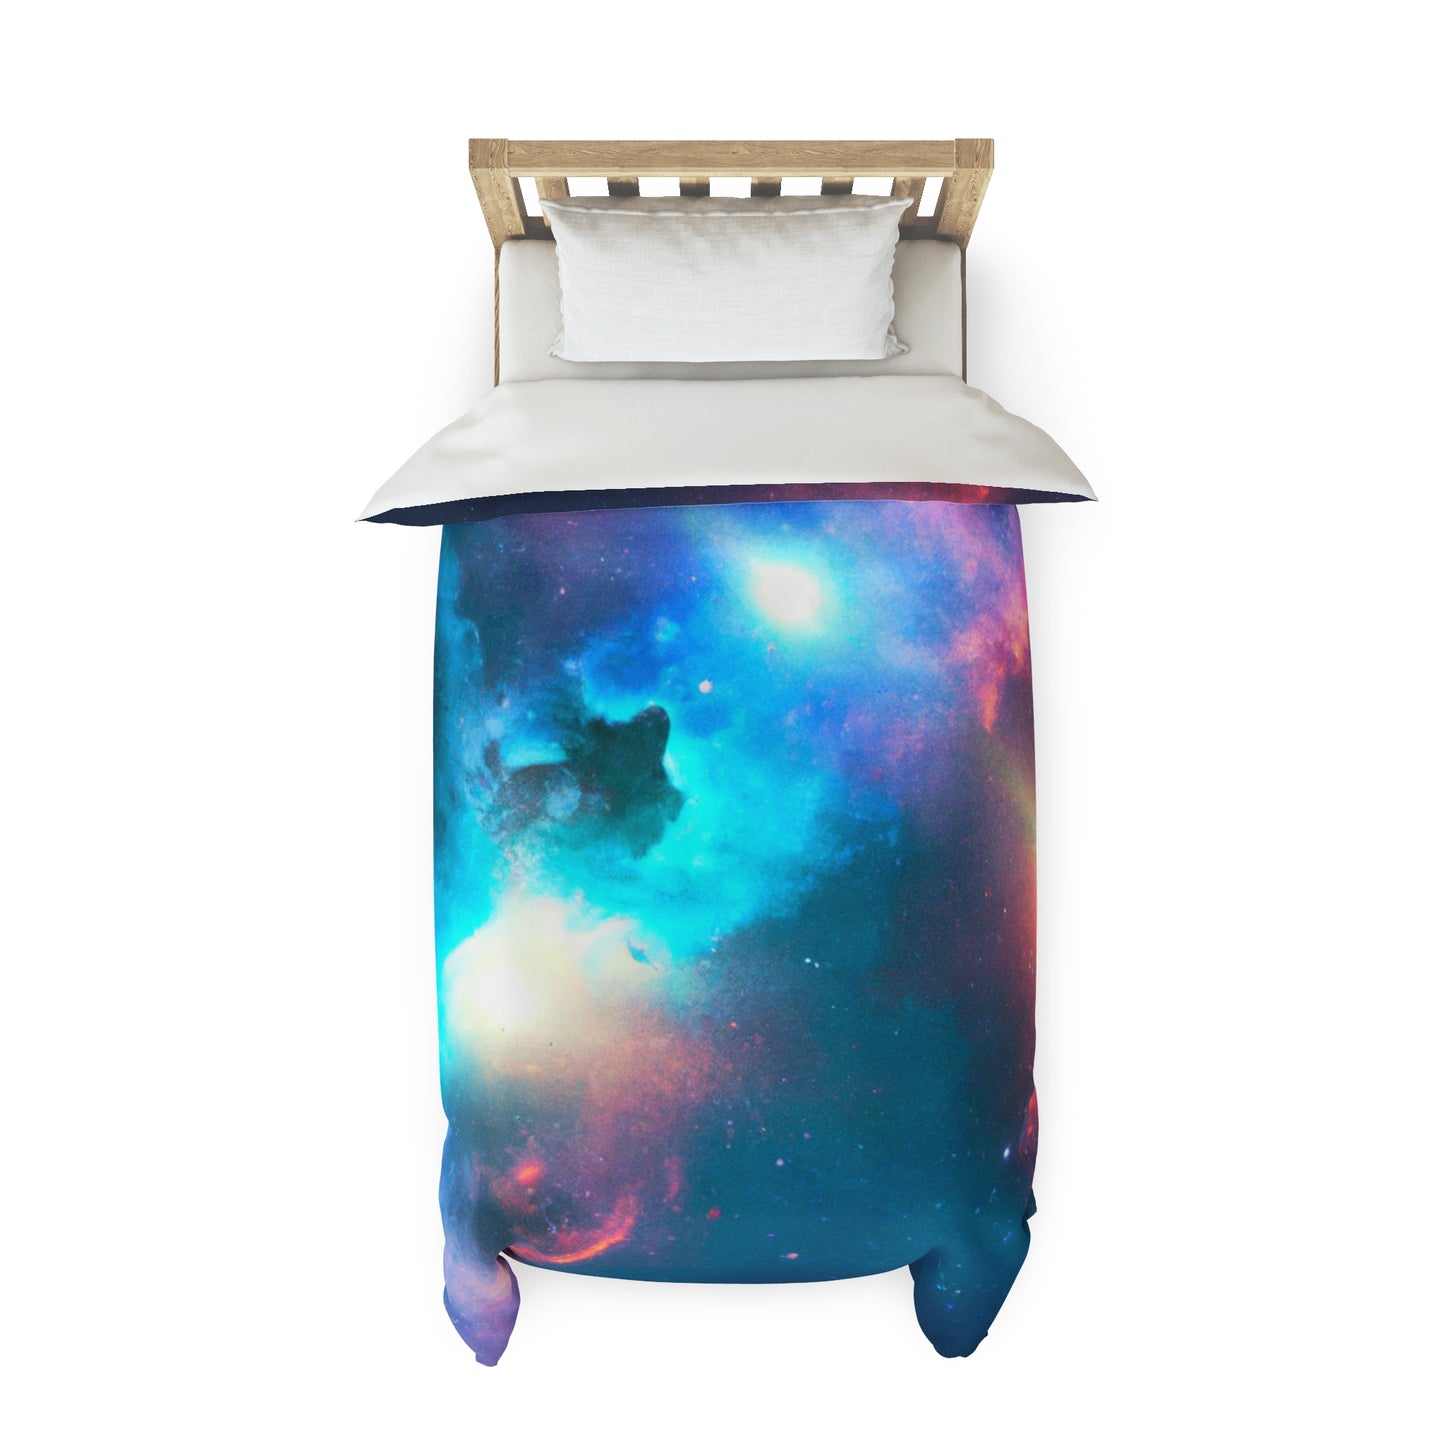 Dreamy McEwan - Astronomy Duvet Bed Cover